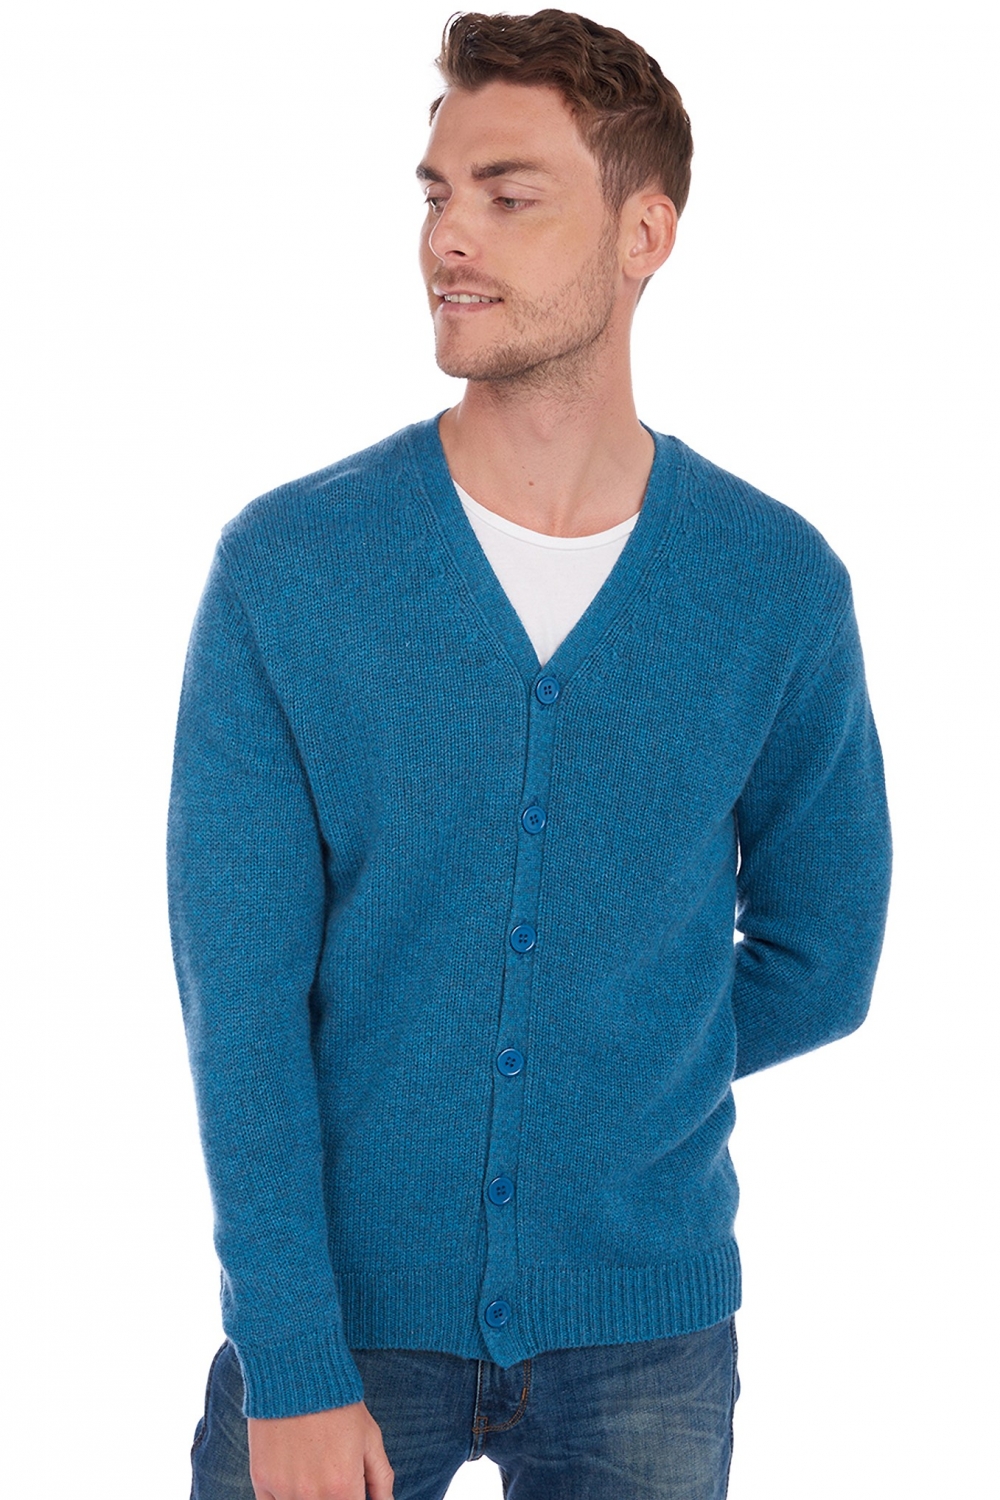 Cashmere men waistcoat sleeveless sweaters aden manor blue m